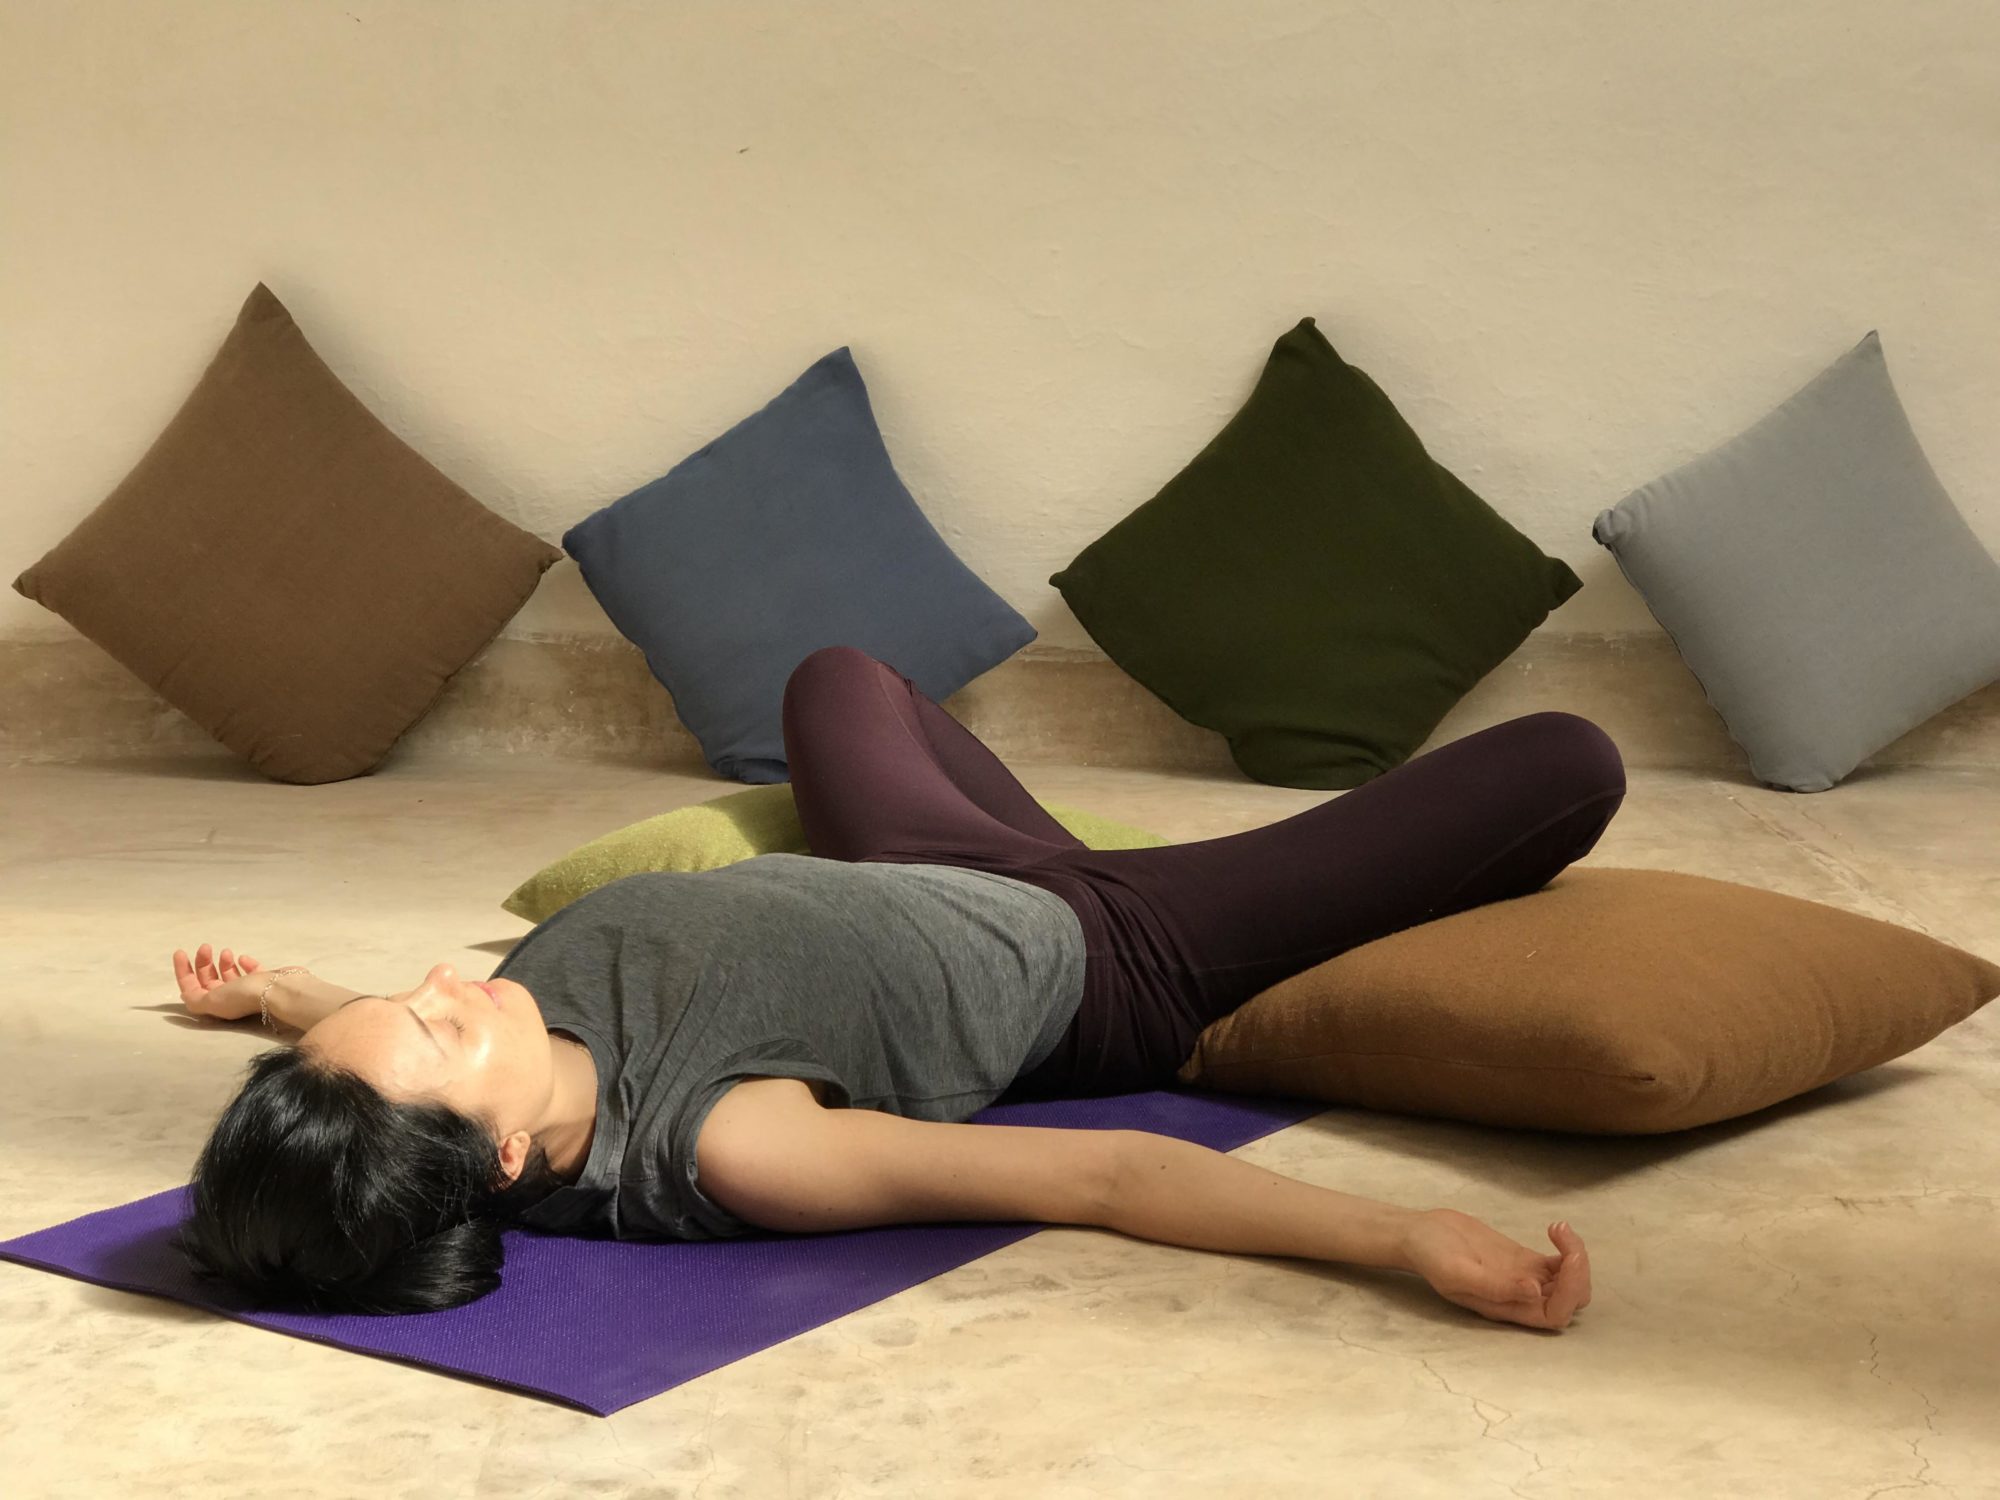 Star Pose - Tarasana | Arm balance yoga poses, Yoga poses, Power yoga poses